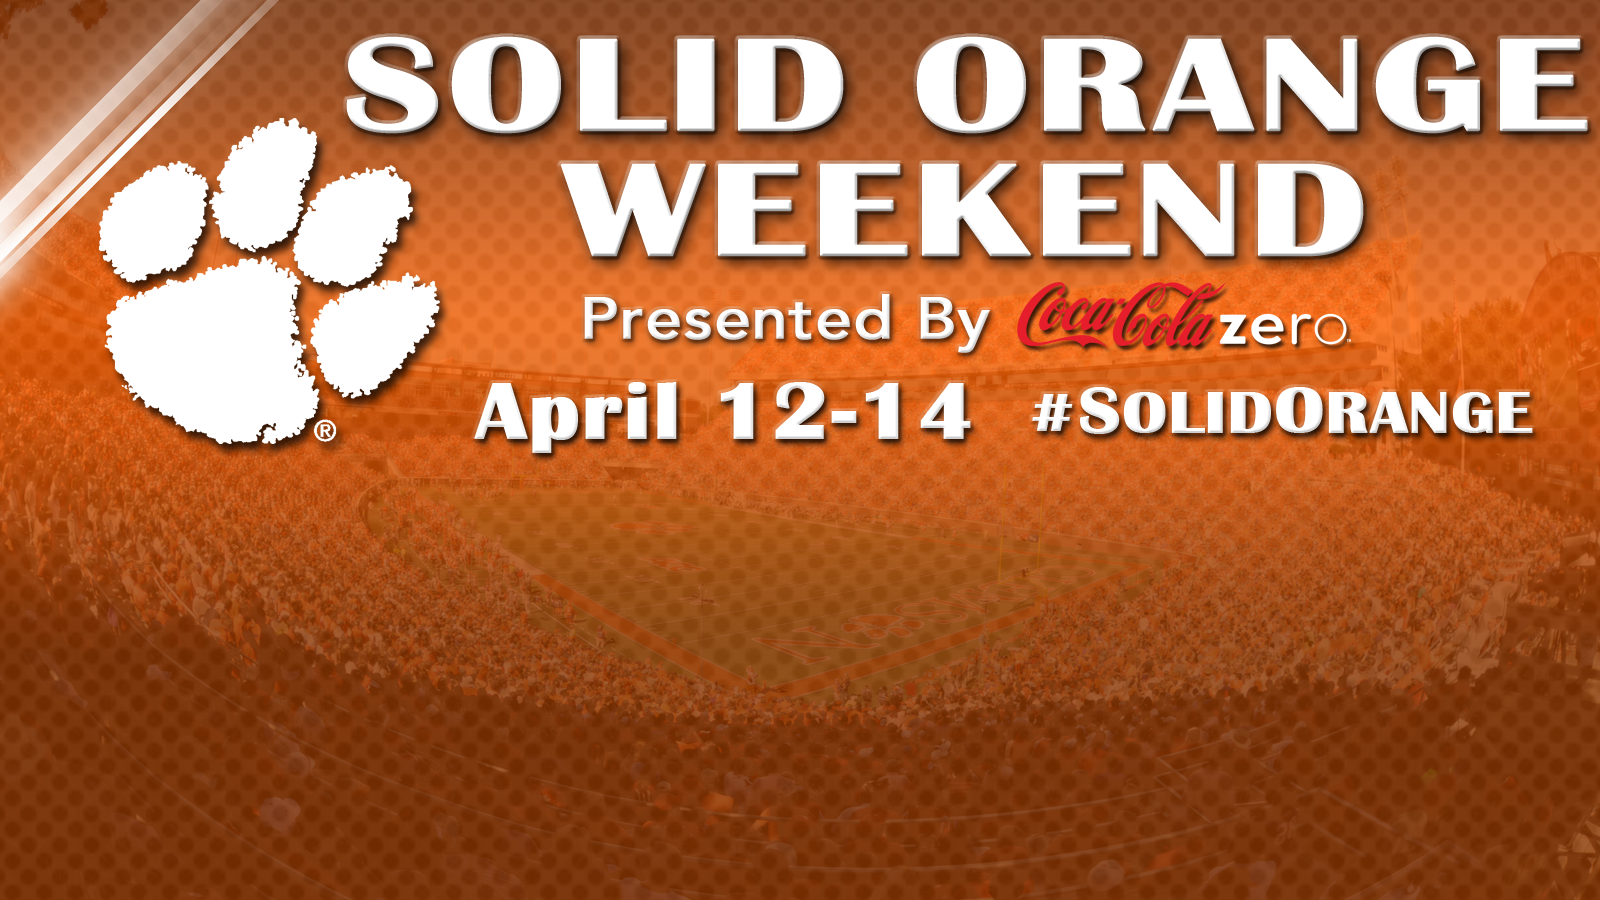 Schedule of Events: Solid Orange Weekend, April 12-14